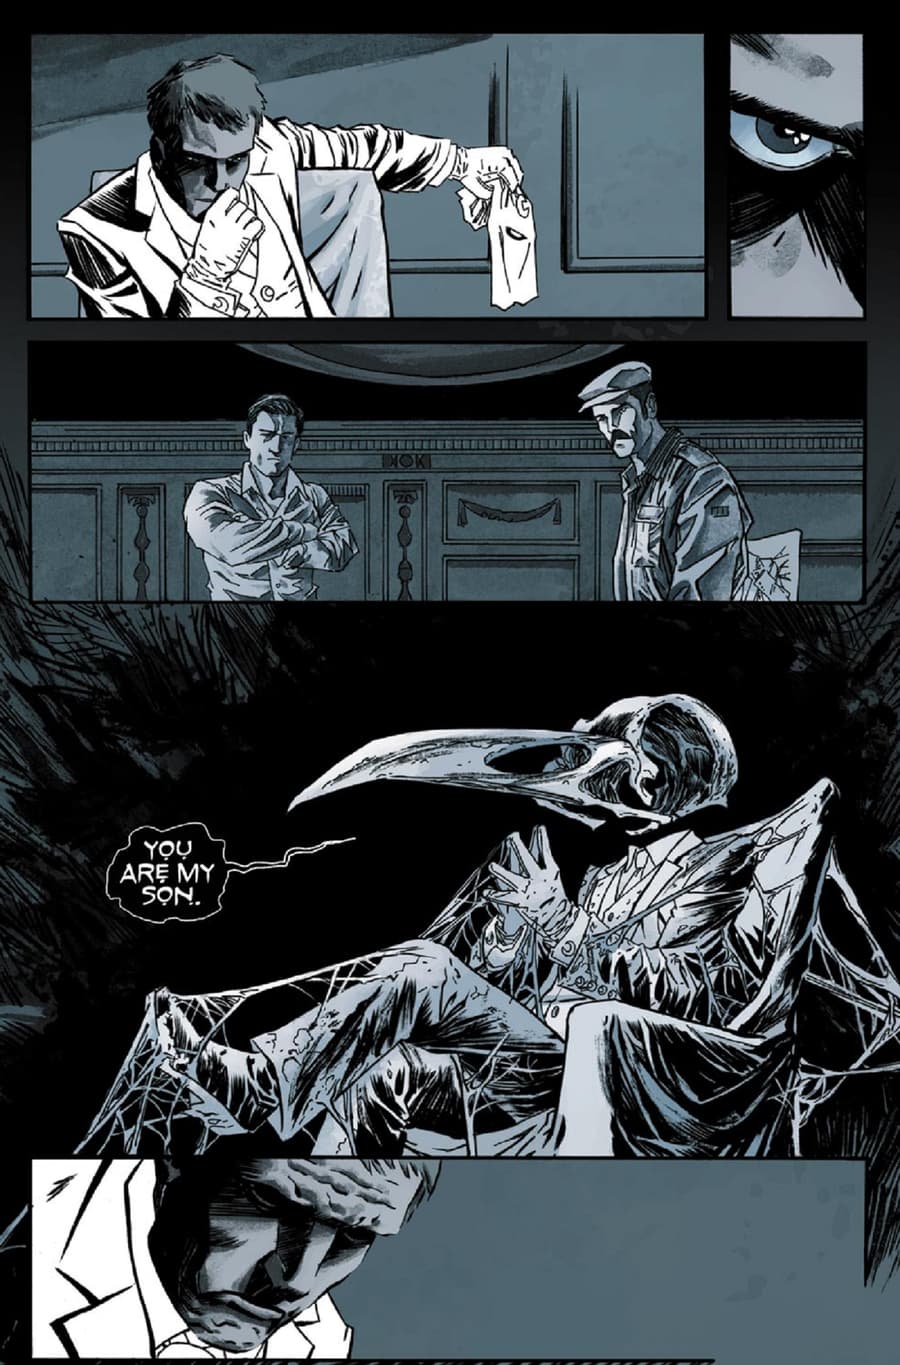 MOON KNIGHT (2014) #1 by Warren Ellis and Declan Shalvey.